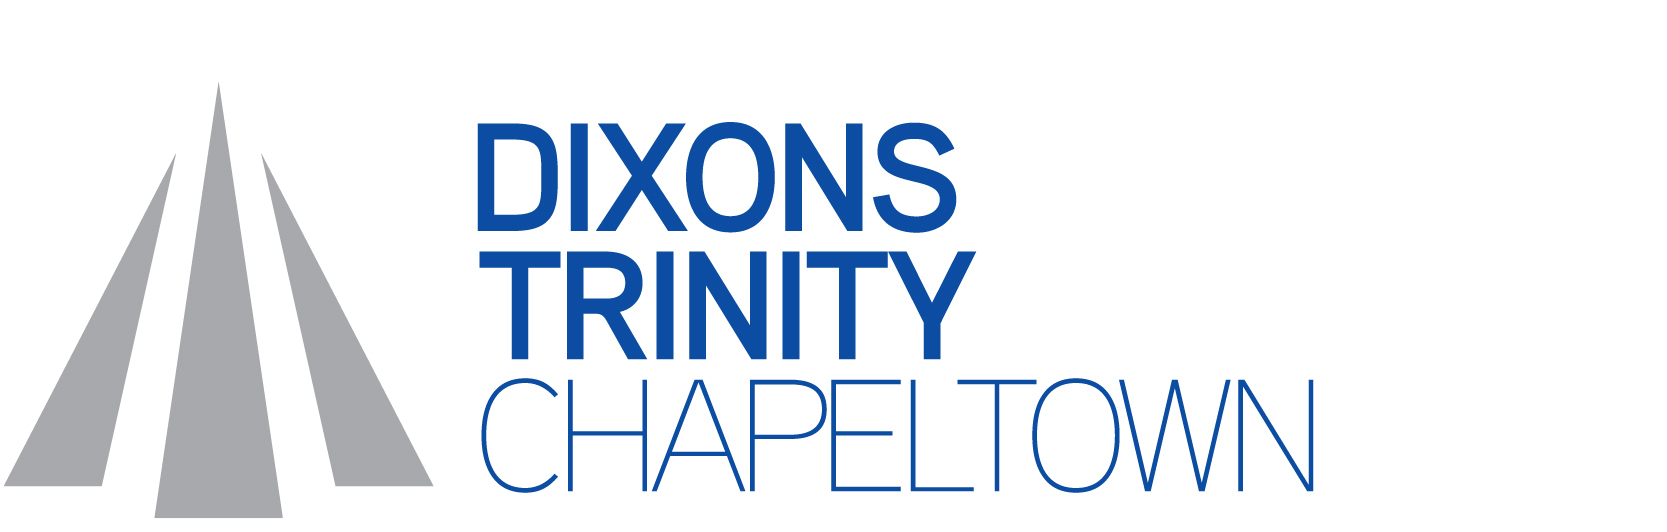 Dixons Trinity Chapeltown